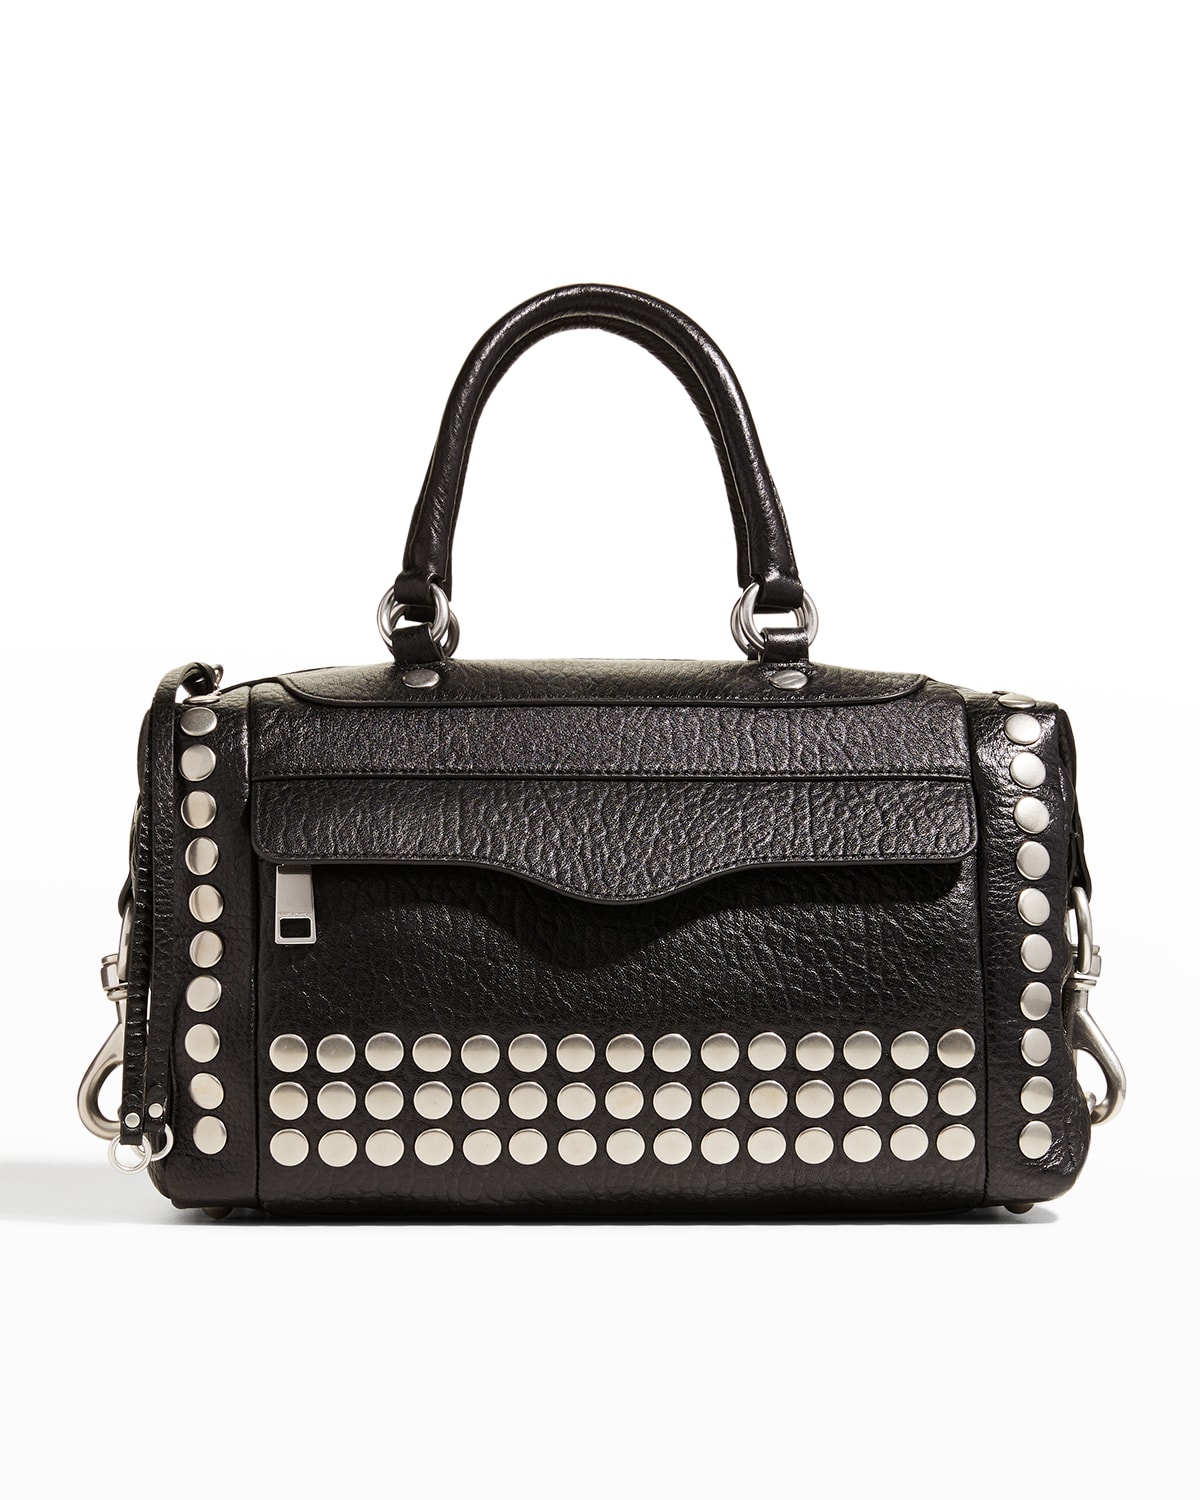 Designer Jc Black Crocodile Studs Lock Bold Tan Stitching Satchel Bag Handbag